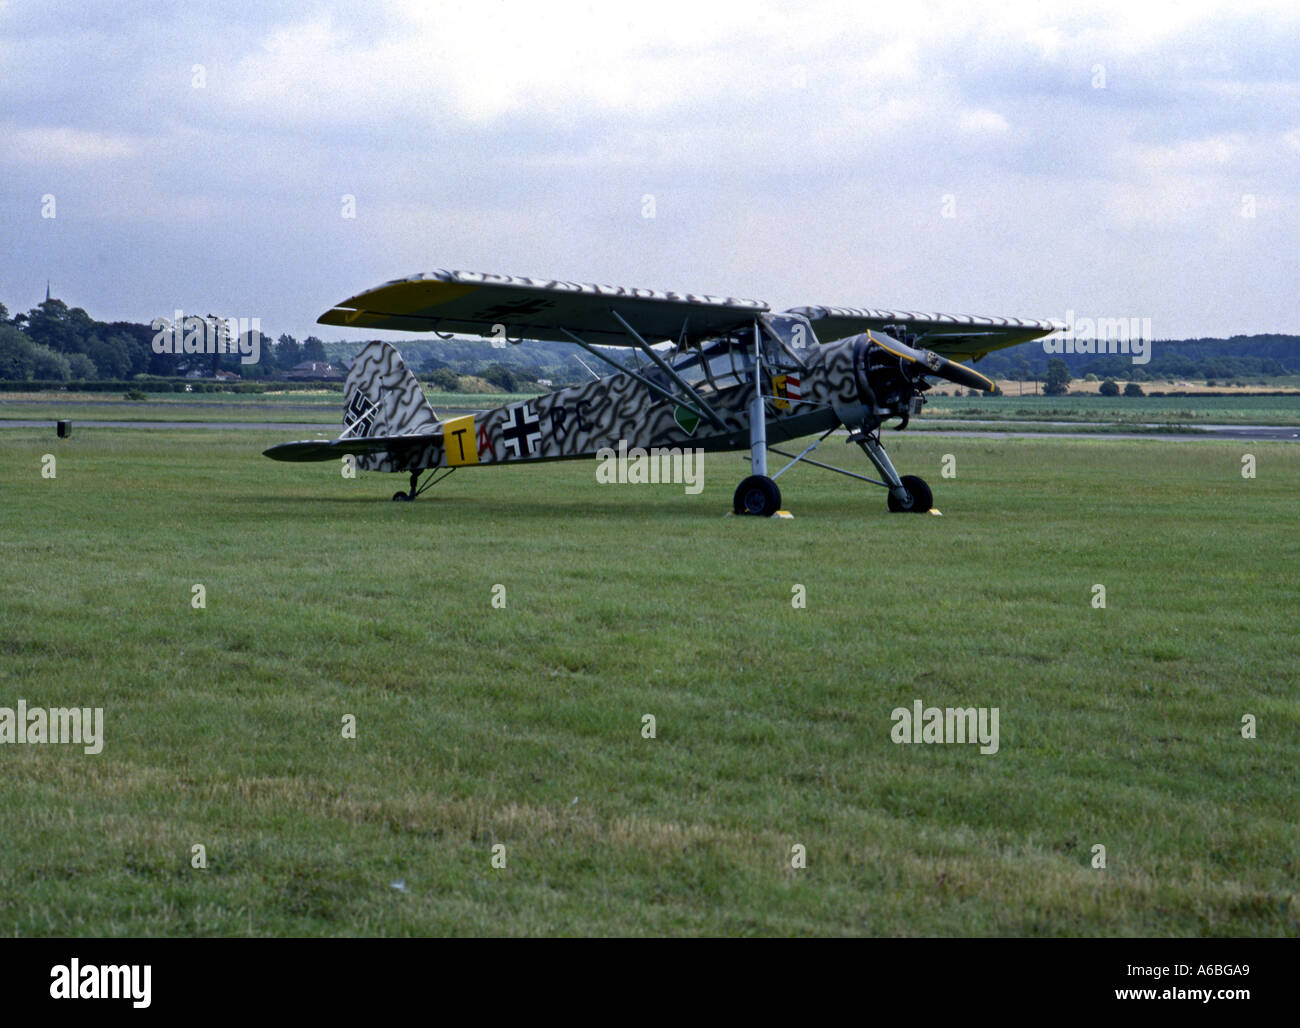 Feisler Storch tedesca di seconda guerra mondiale spotting e liaison aeromobili su schermo ad un air show Foto Stock